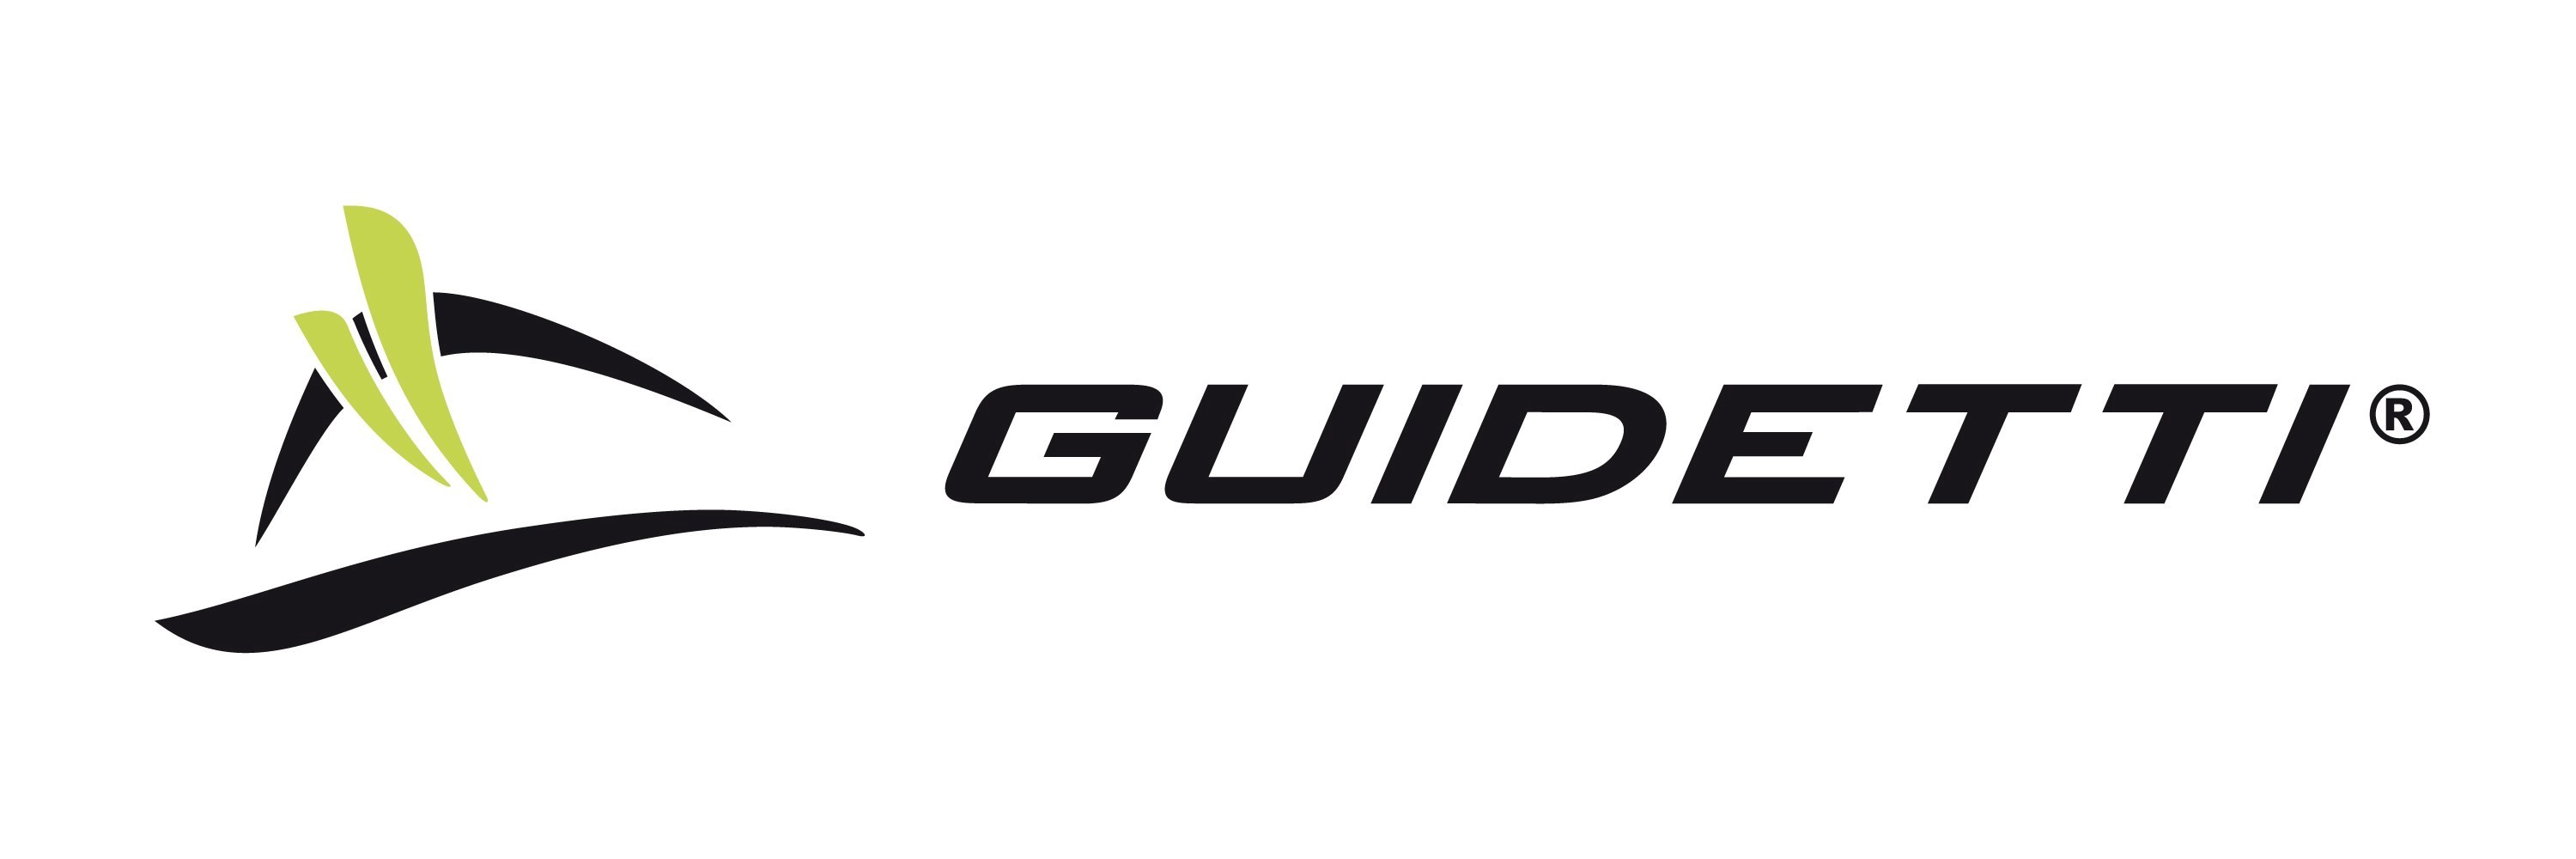 Guidetti logo